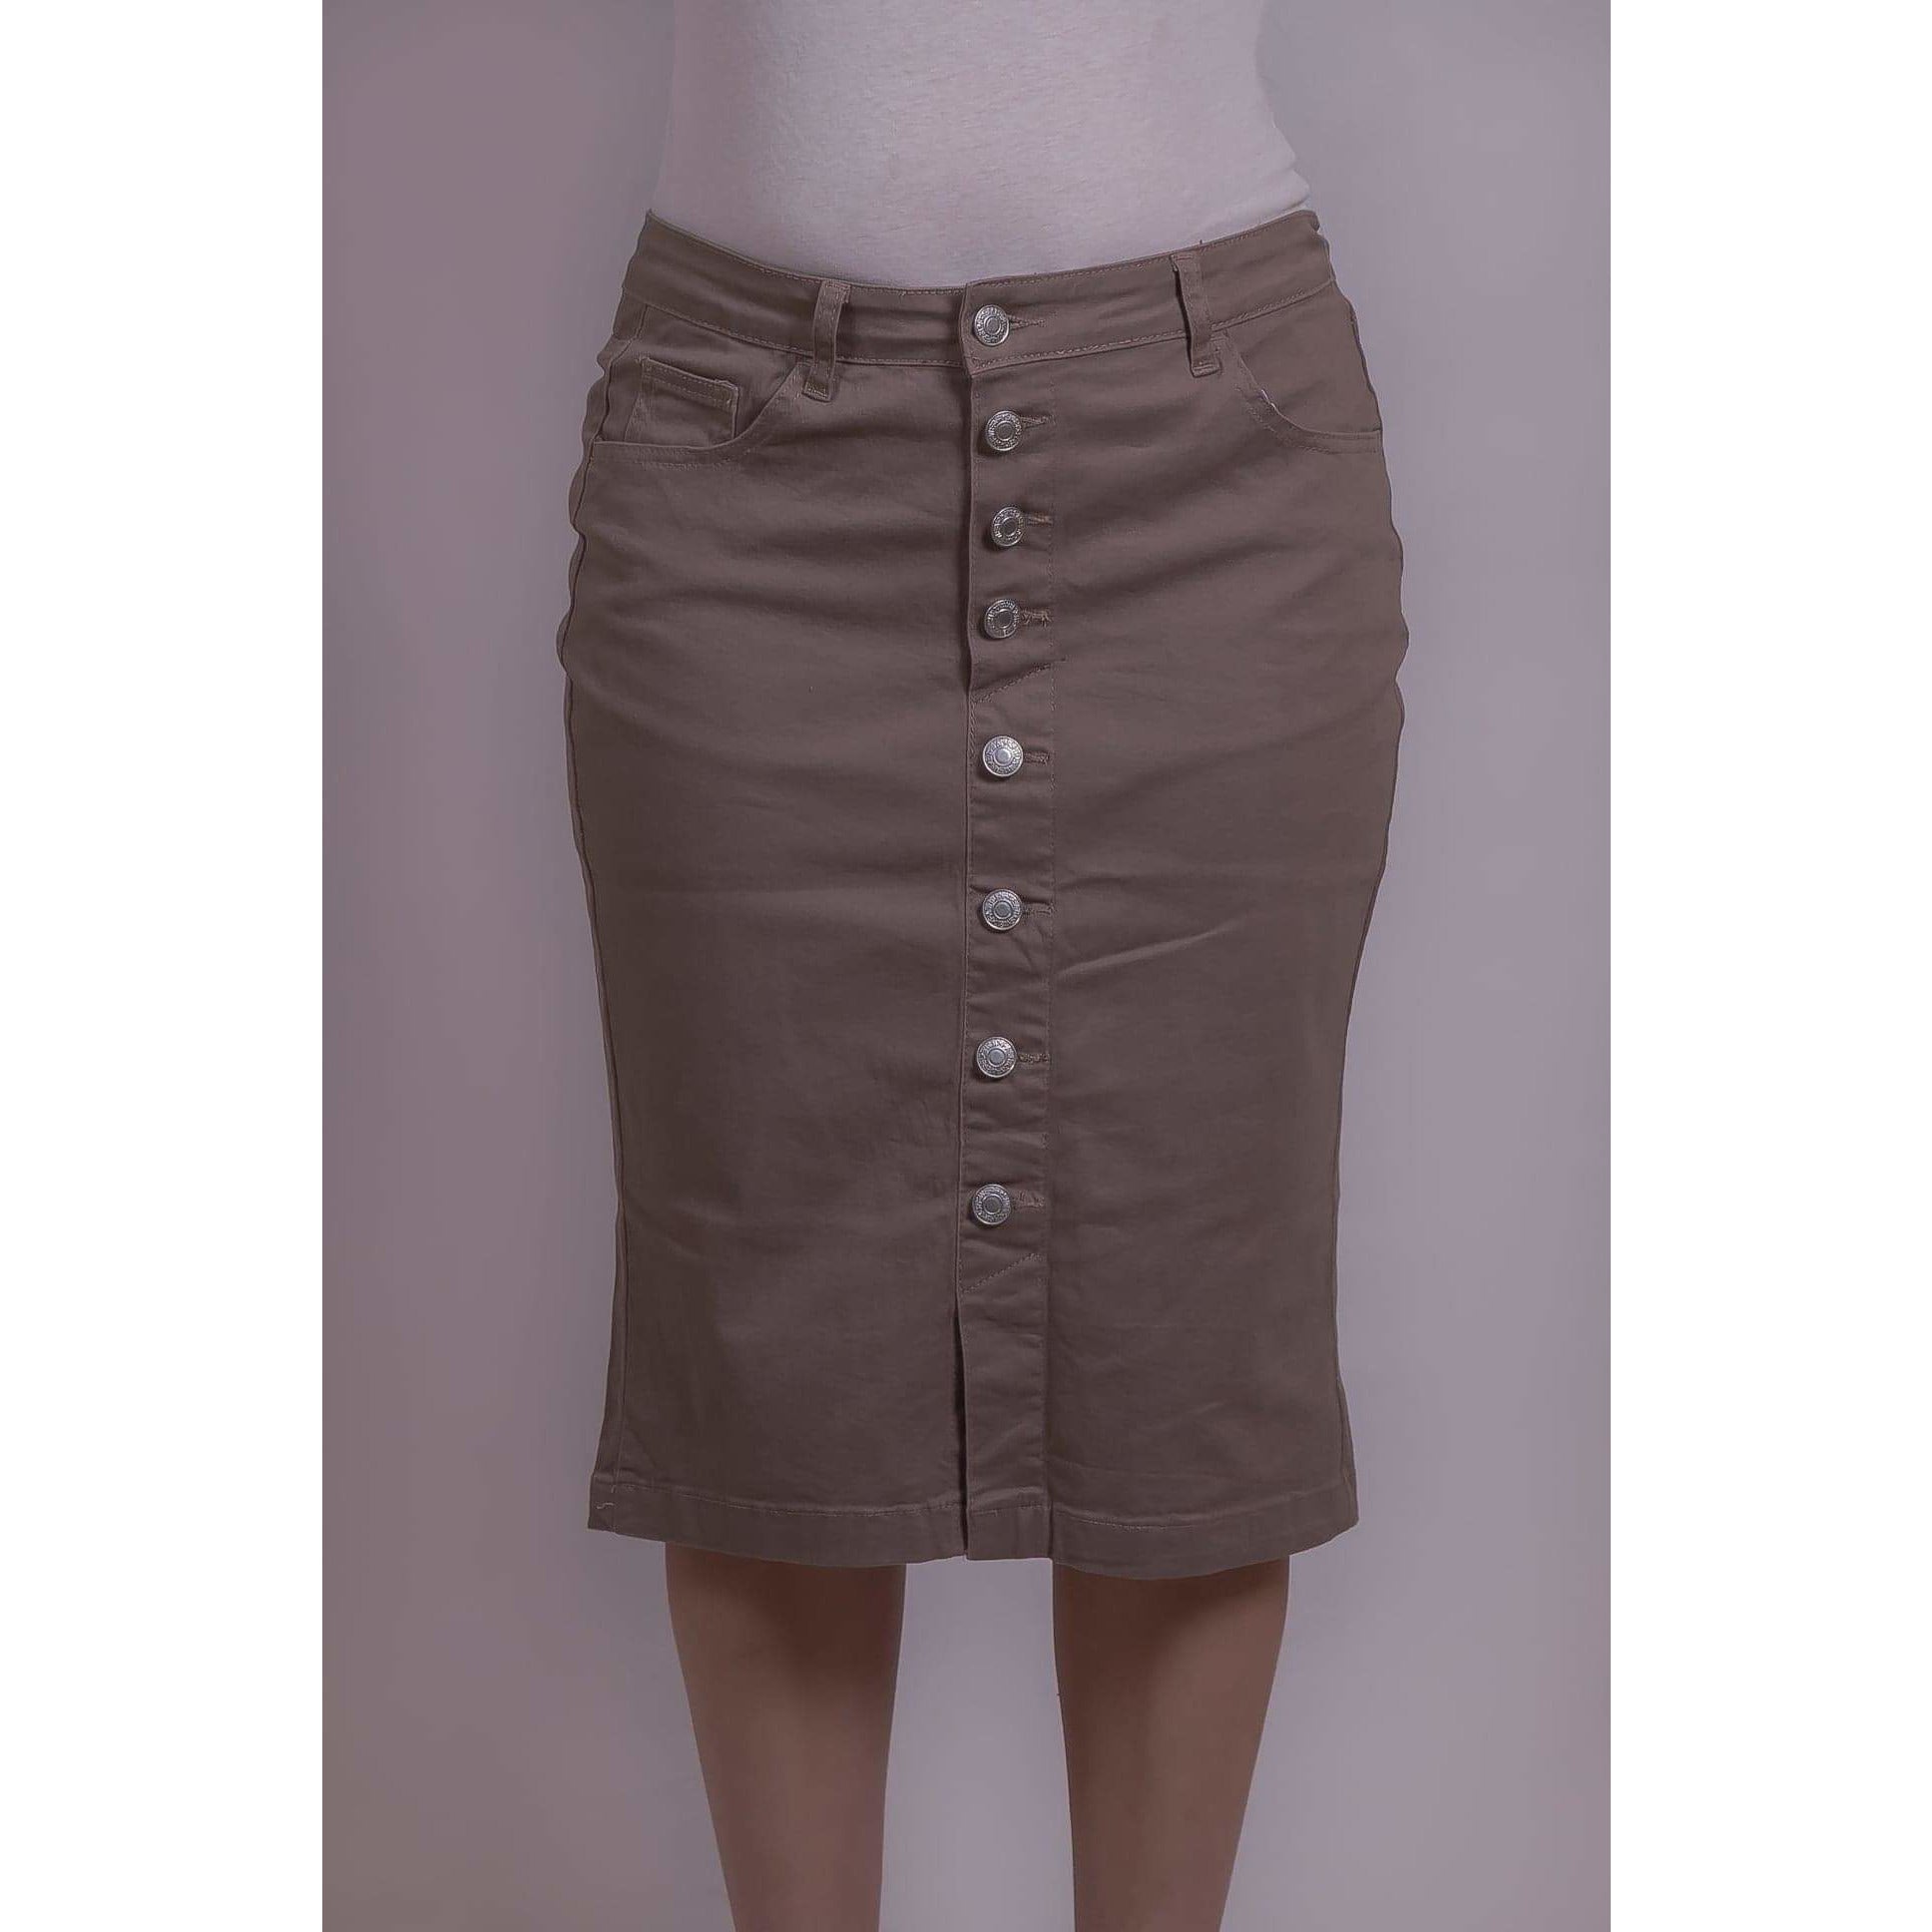 tan button down skirt